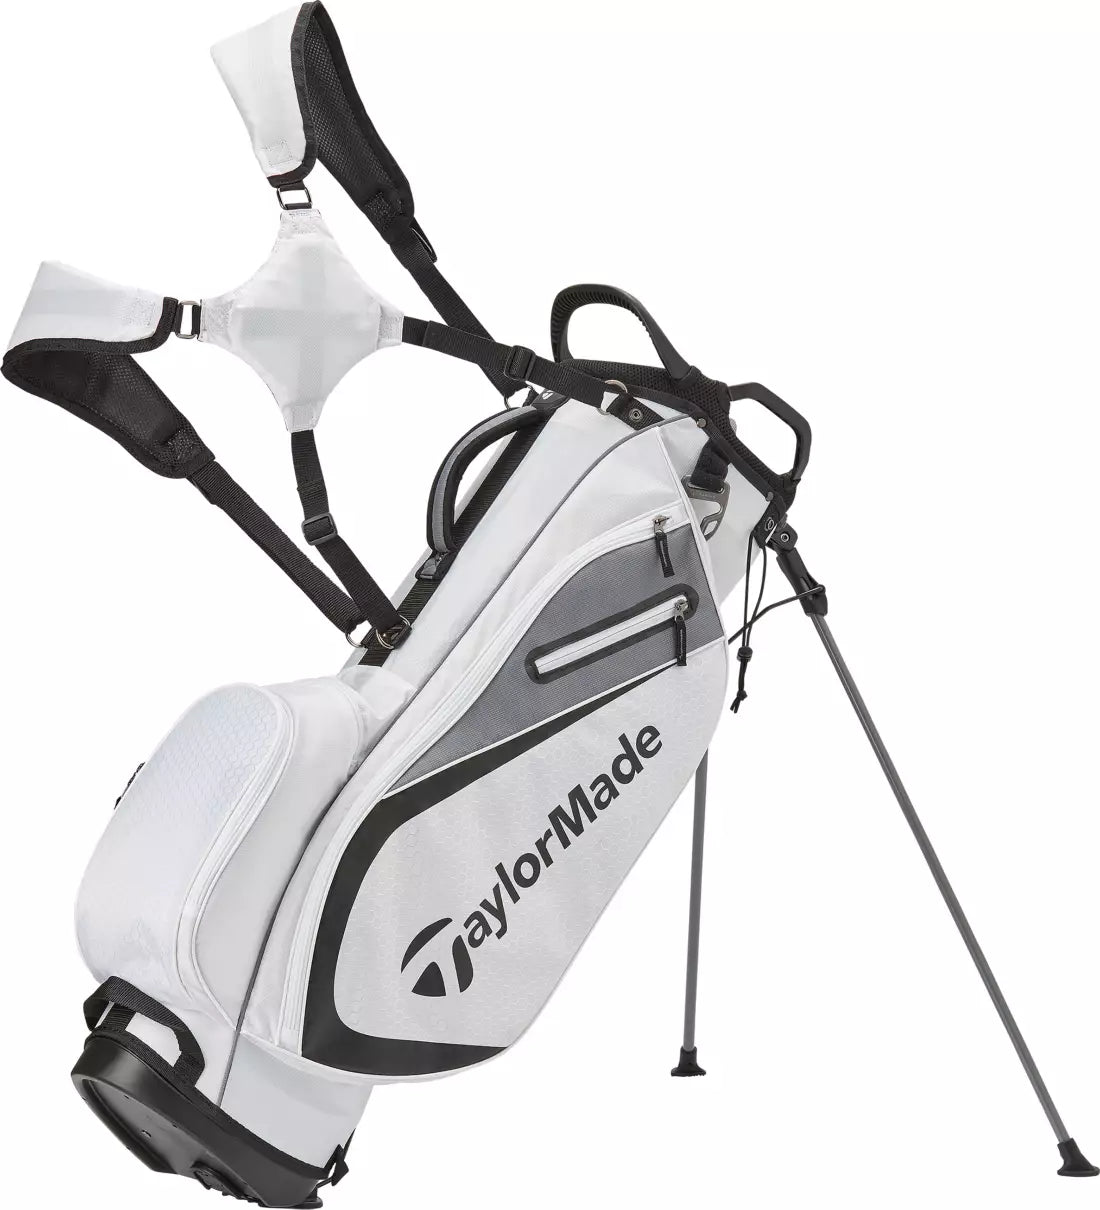 TaylorMade Select Stand Bag - Niagara Golf Warehouse TAYLORMADE BAGS & CARTS